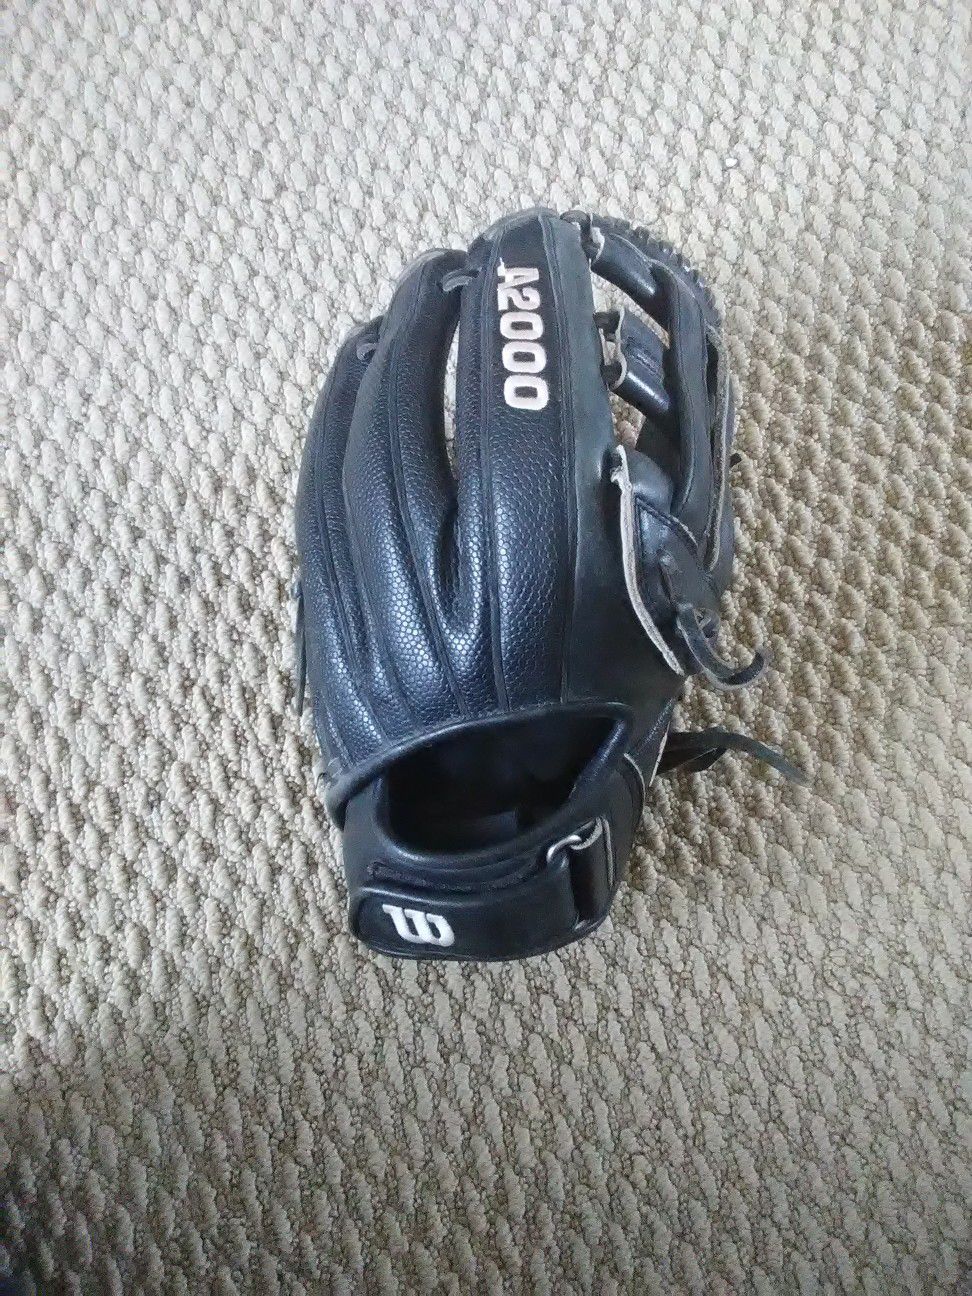 A2000 Wilson softball glove